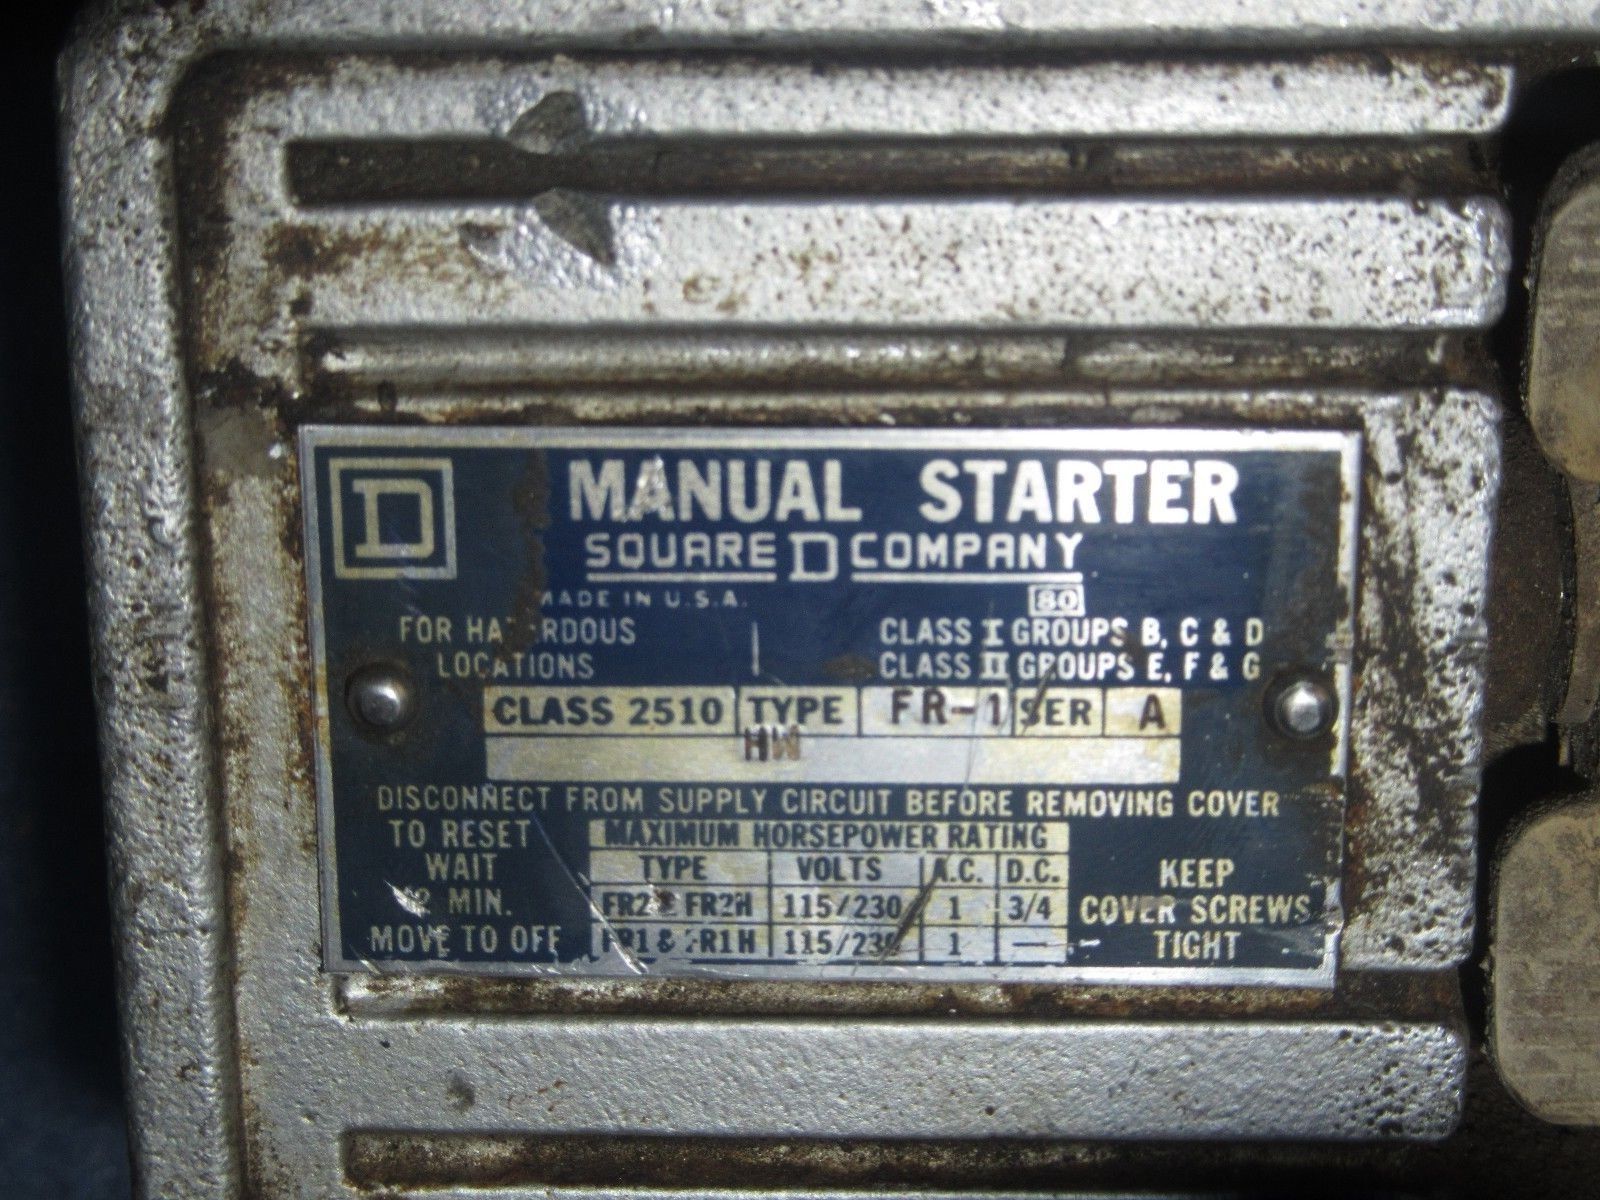 Square D Manual Motor Starting Switch 2510 FR1 